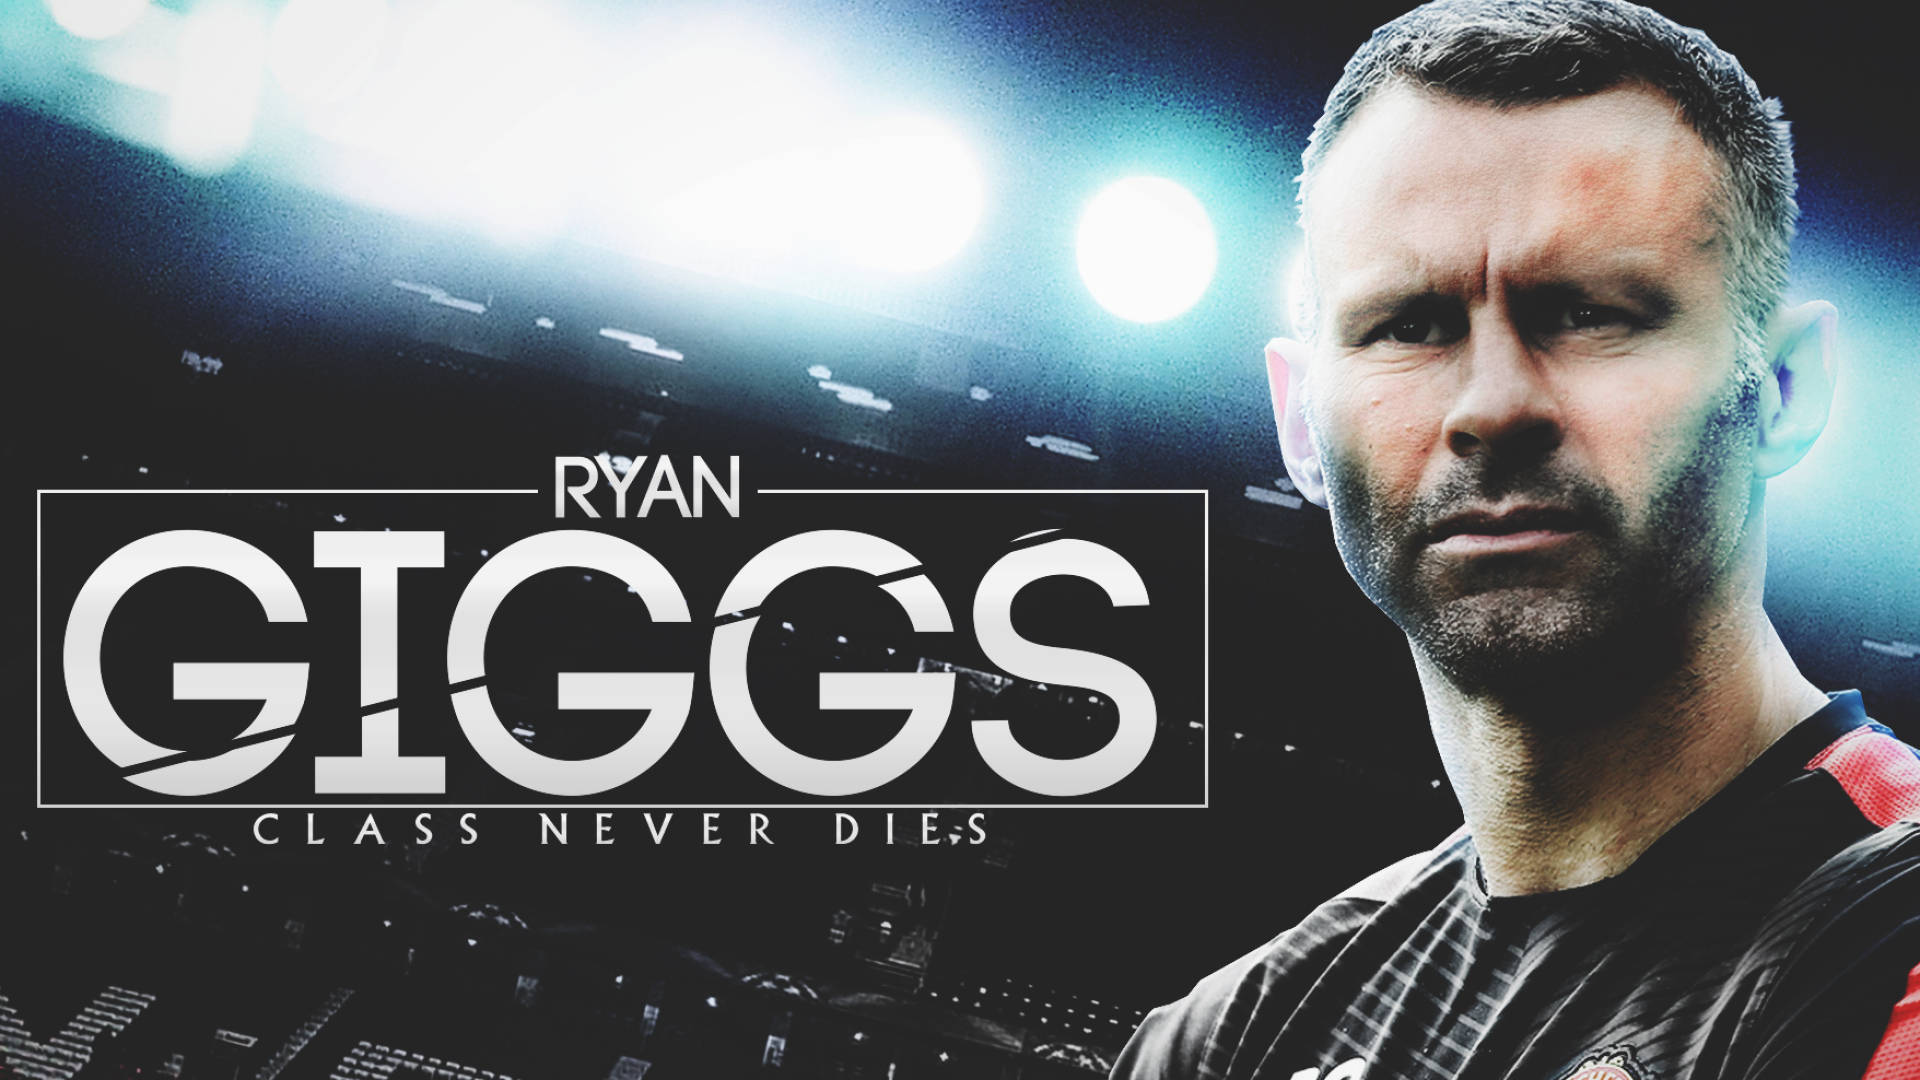 Ryan Giggs Class Never Dies Background